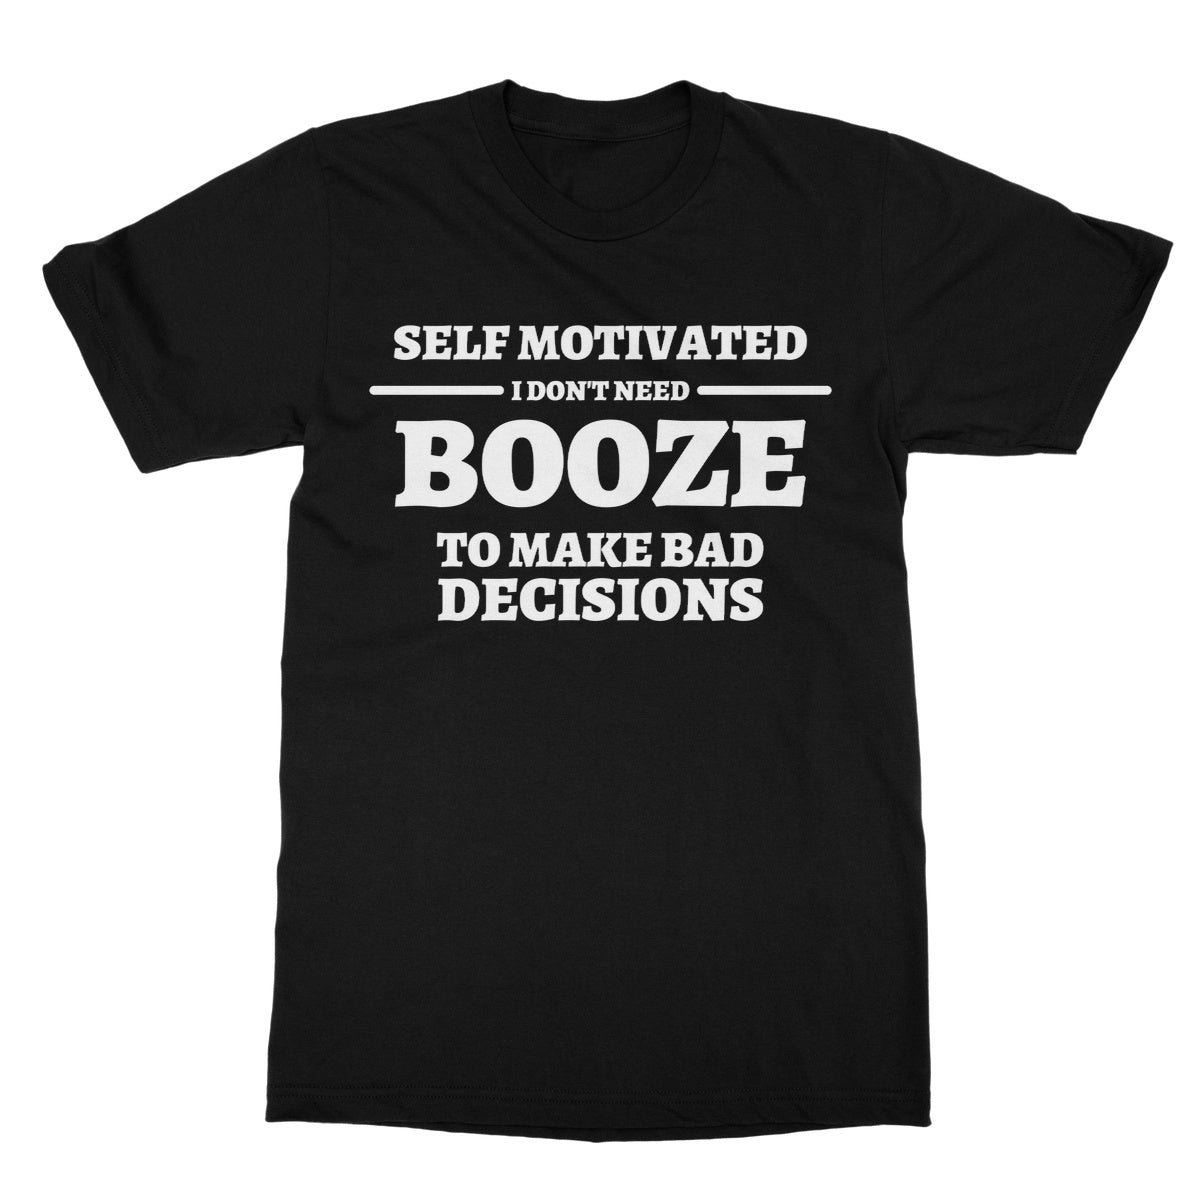 I don't need booze to make bad decisions t shirt black